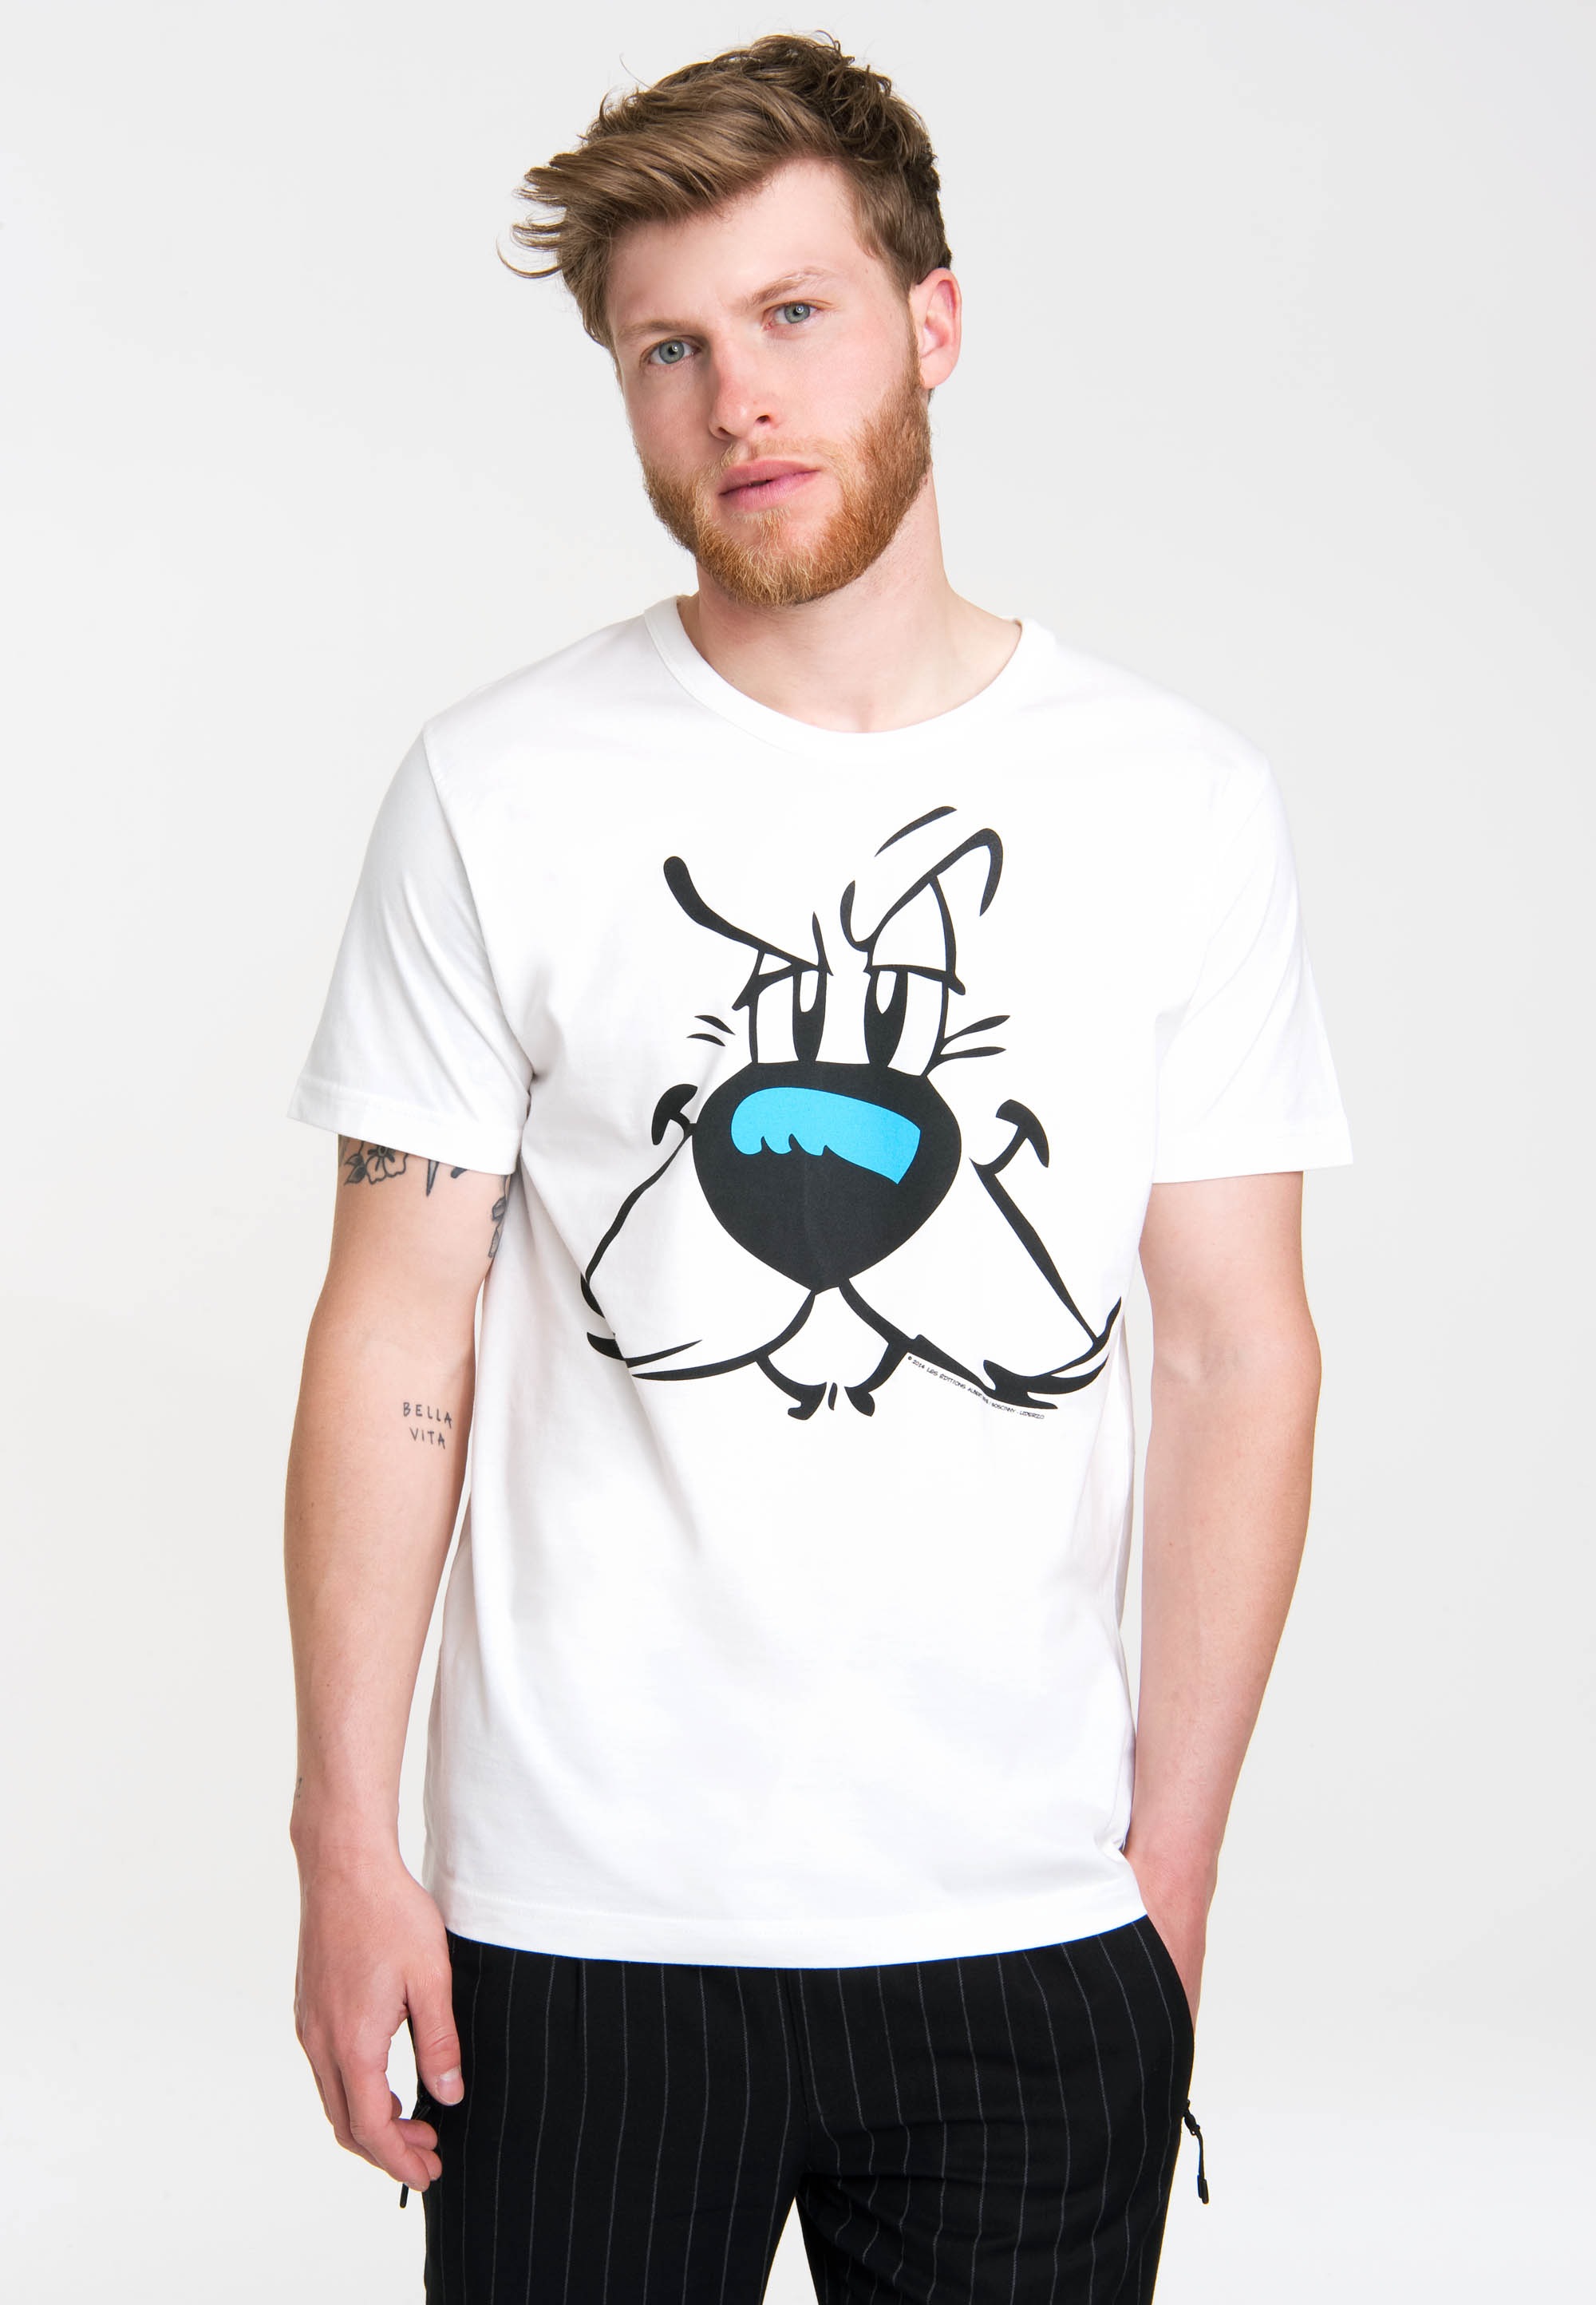 Logoshirt®️ Asterix & Obelix I Idefix T-Shirt Unisex I Motiv-Shirt altweiß kurzärmlig Rundhalskragen I Lizenziertes Originaldesign I hochwertiger Logo-Print I Baumwolle I Vintage T-Shirt